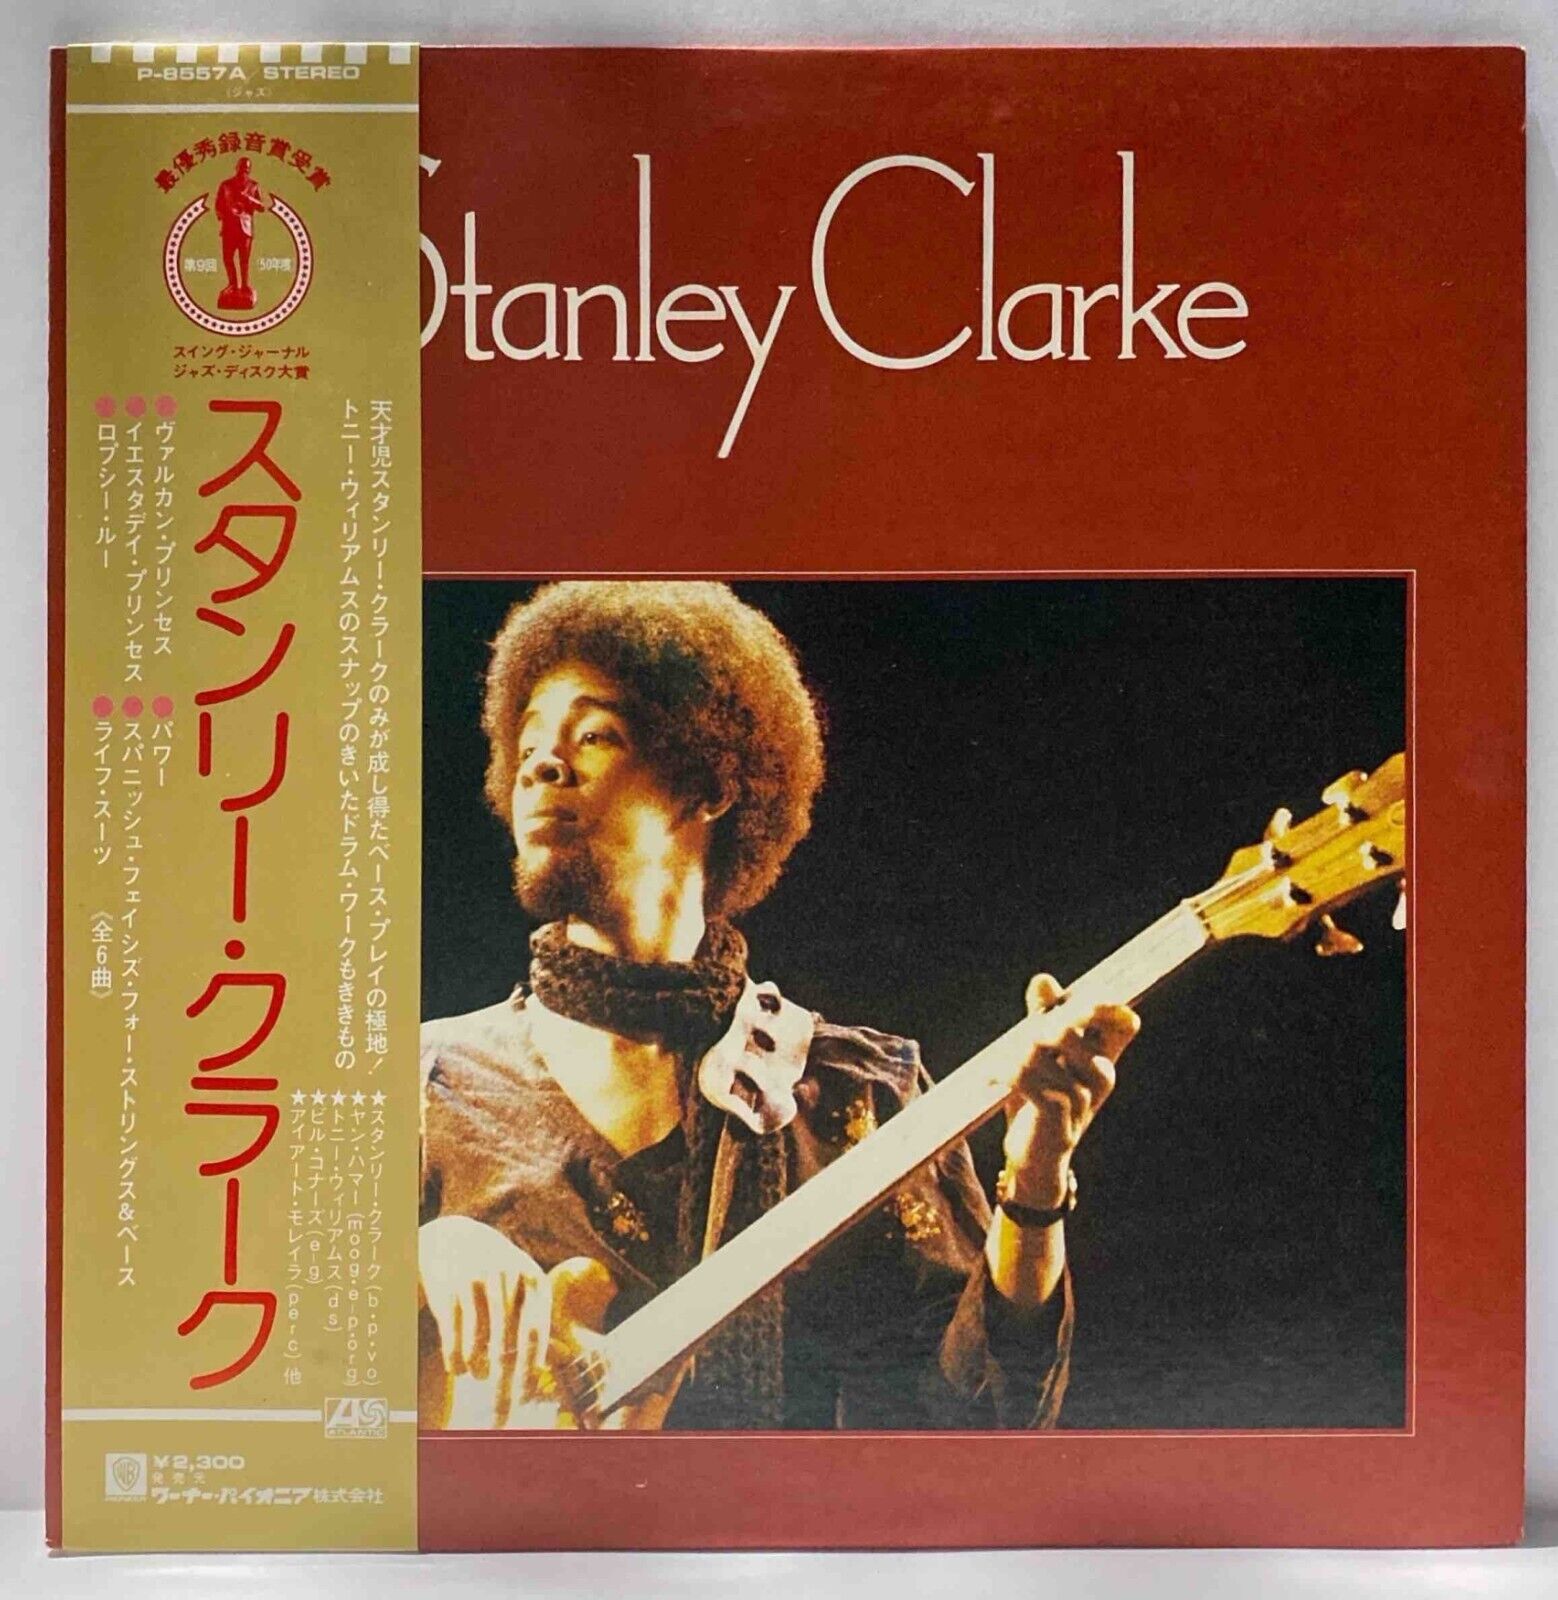 Stanley Clarke - SELF TITLED - Japan Vinyl - OBI - Insert - P-8557A